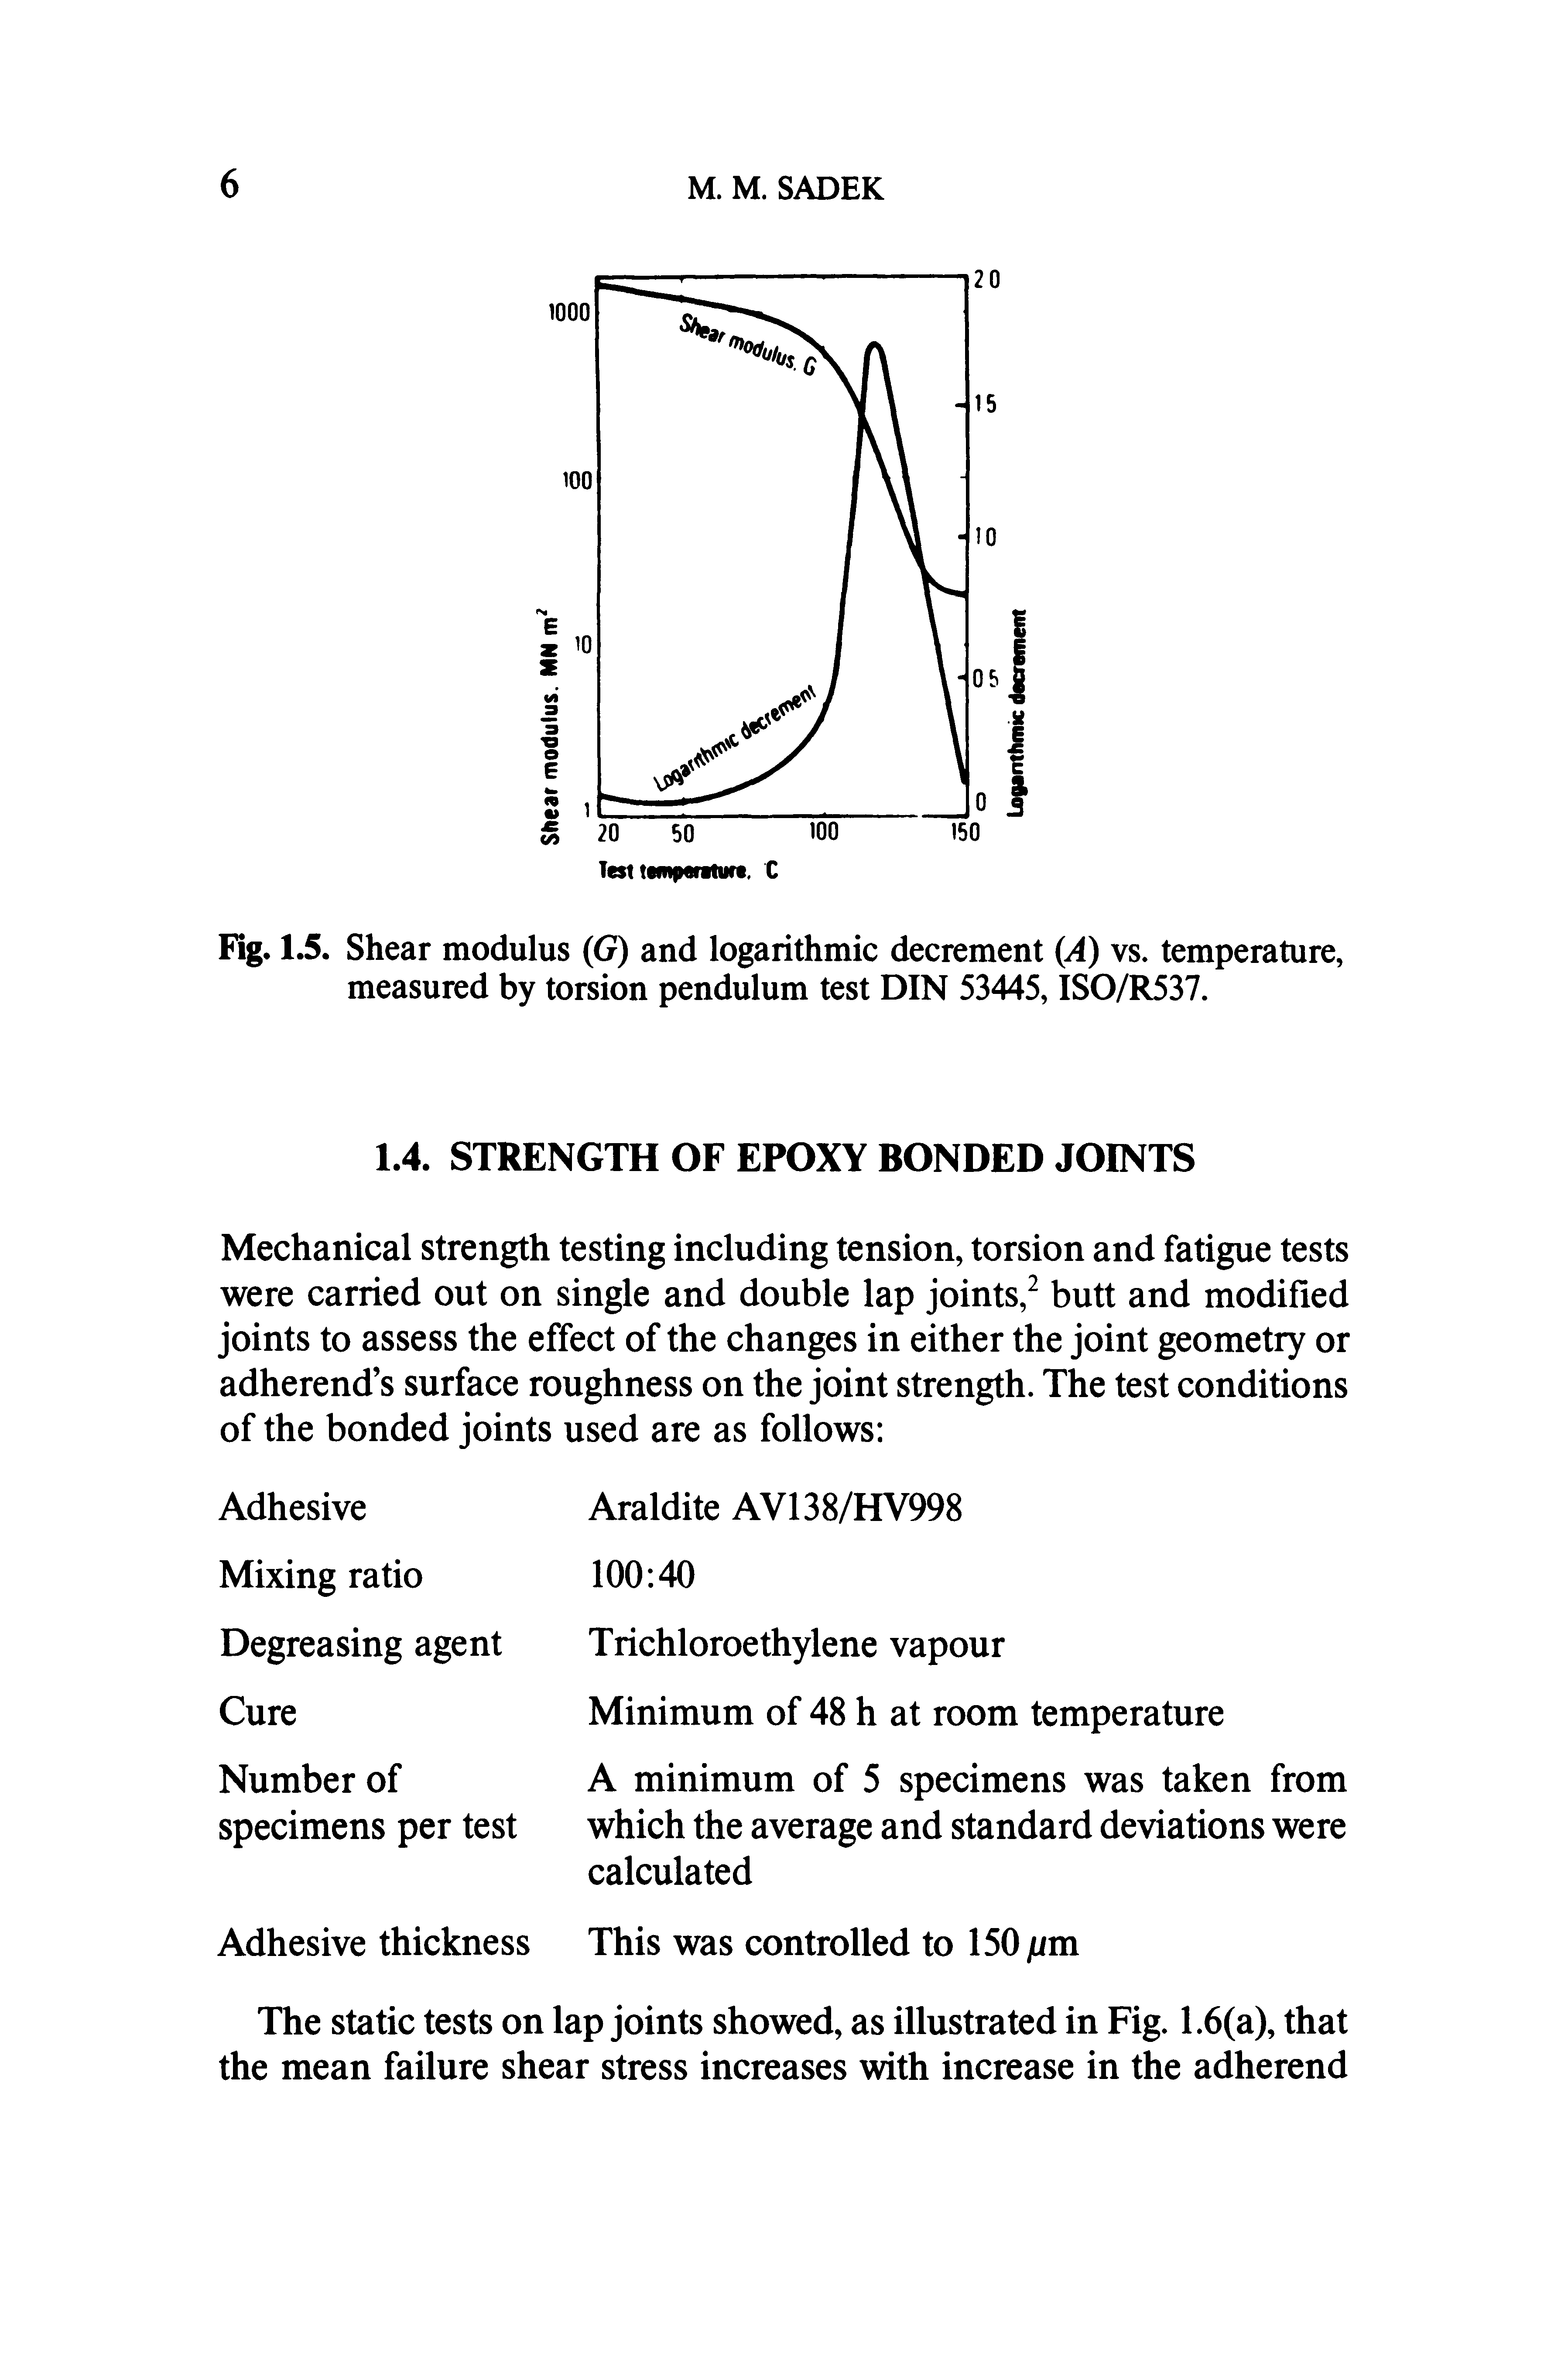 Fig. U. Shear modulus (G) and logarithmic decrement ( 4) vs. temperature, measured by torsion pendulum test DIN 53445, ISO/R537.